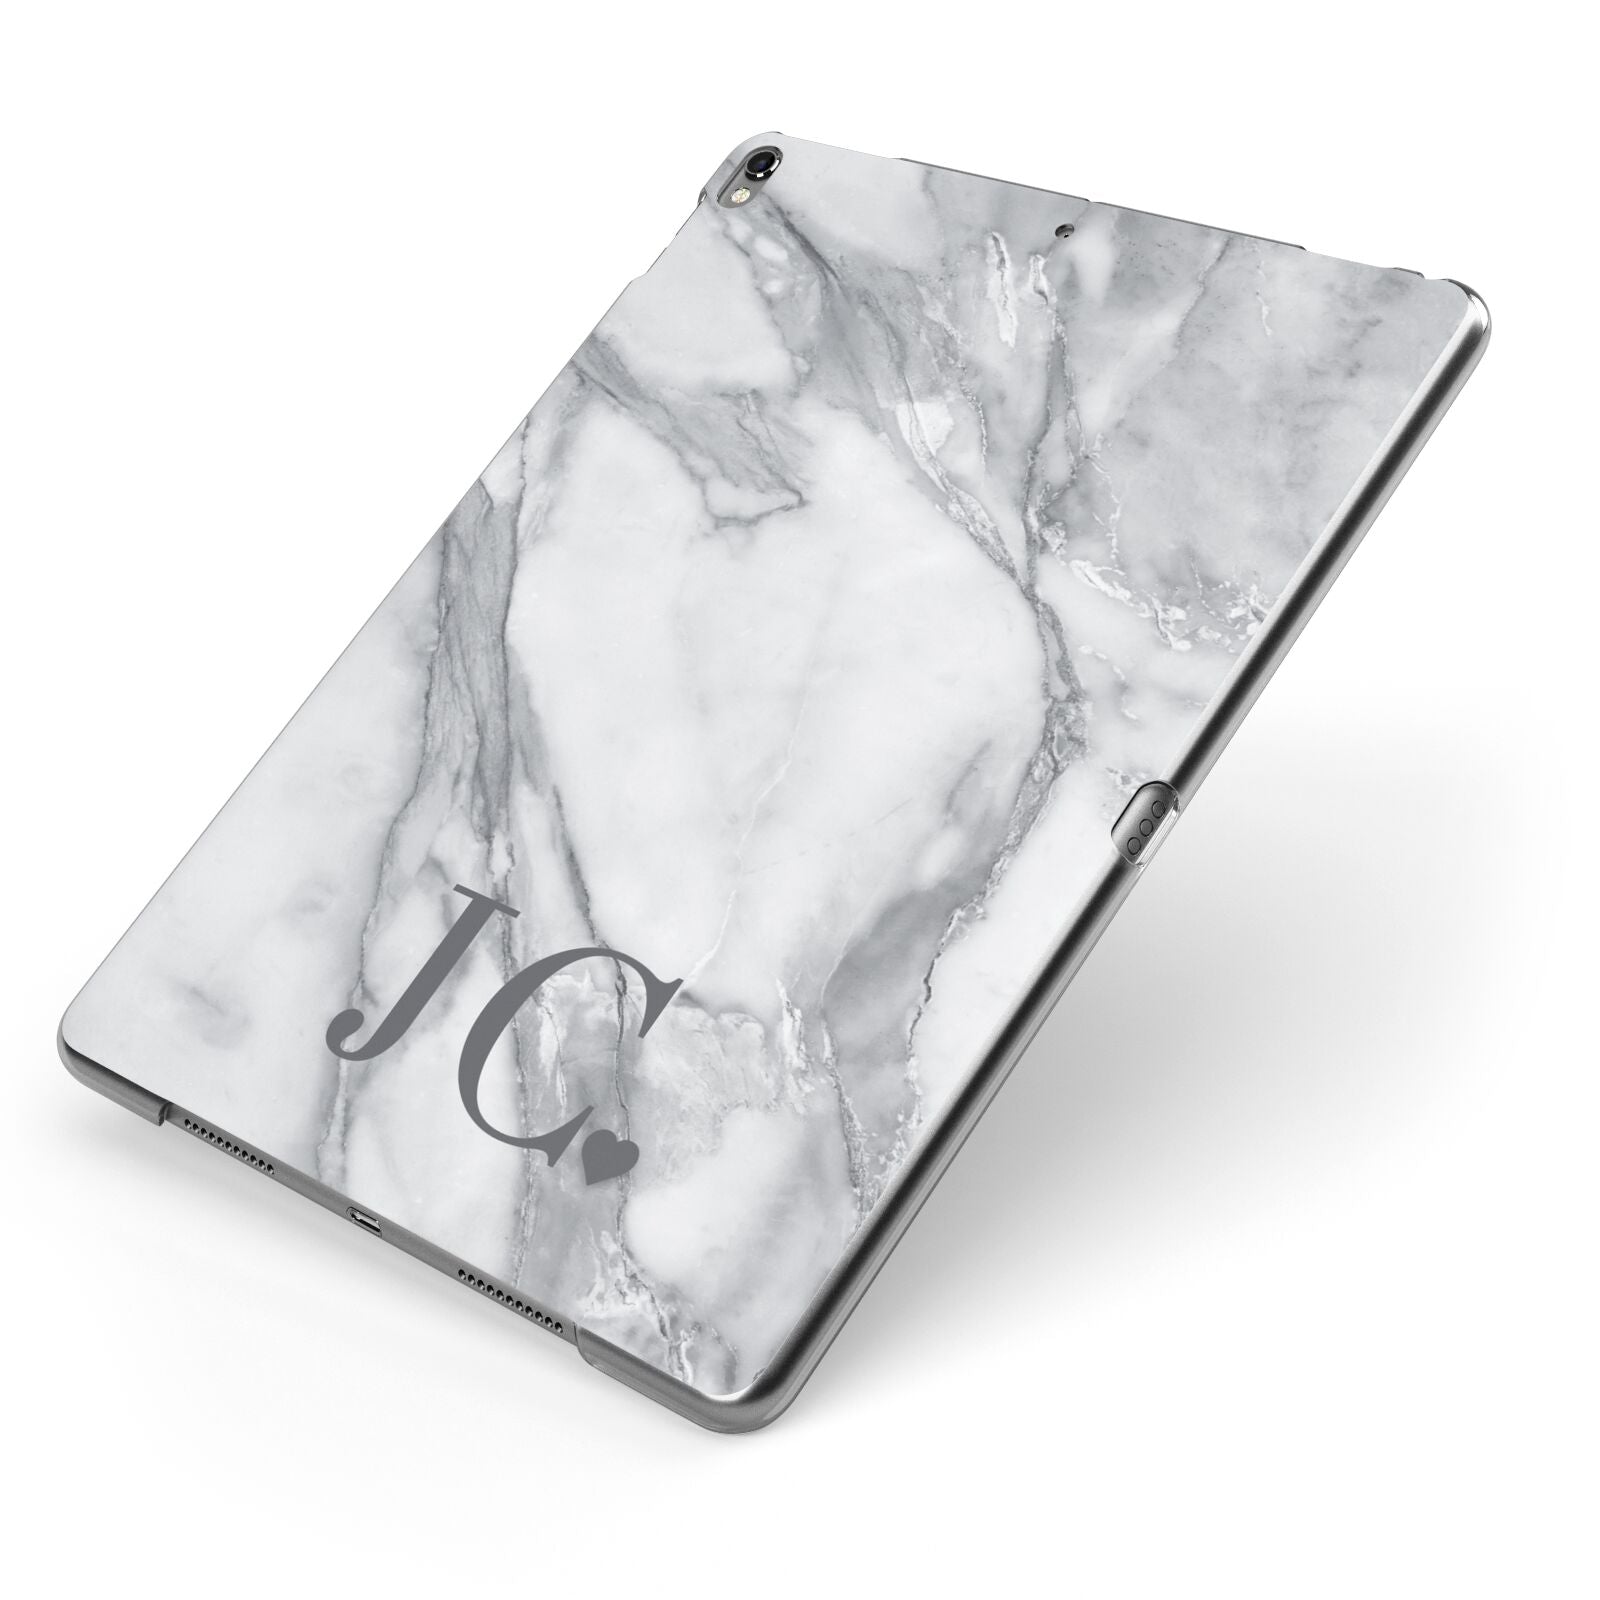 Initials Love Heart Apple iPad Case on Grey iPad Side View